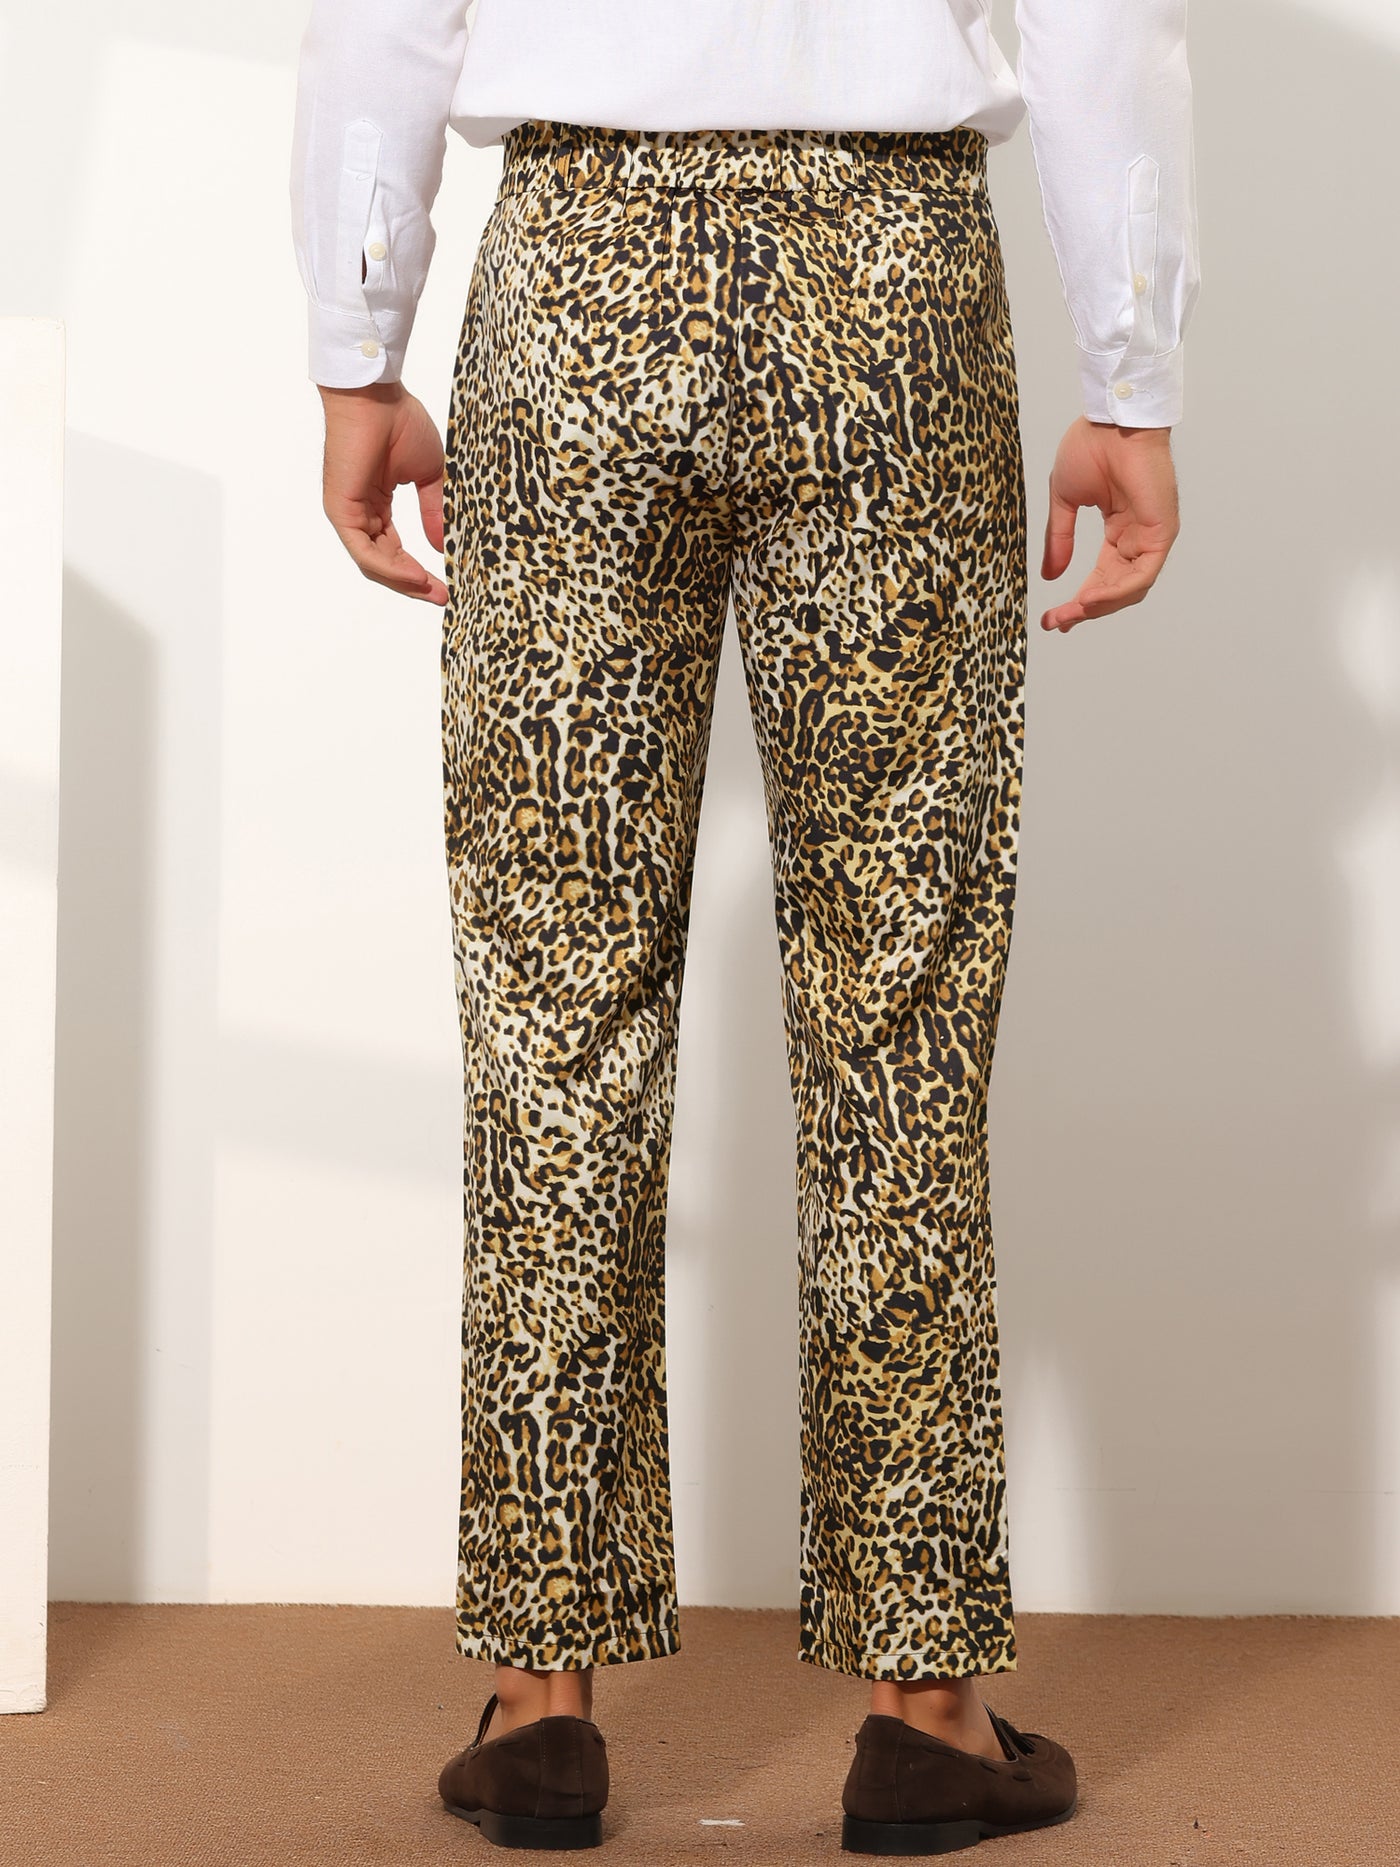 Bublédon Animal Printed Dress Pants for Men's Regular Fit Button Closure Pattern Trousers